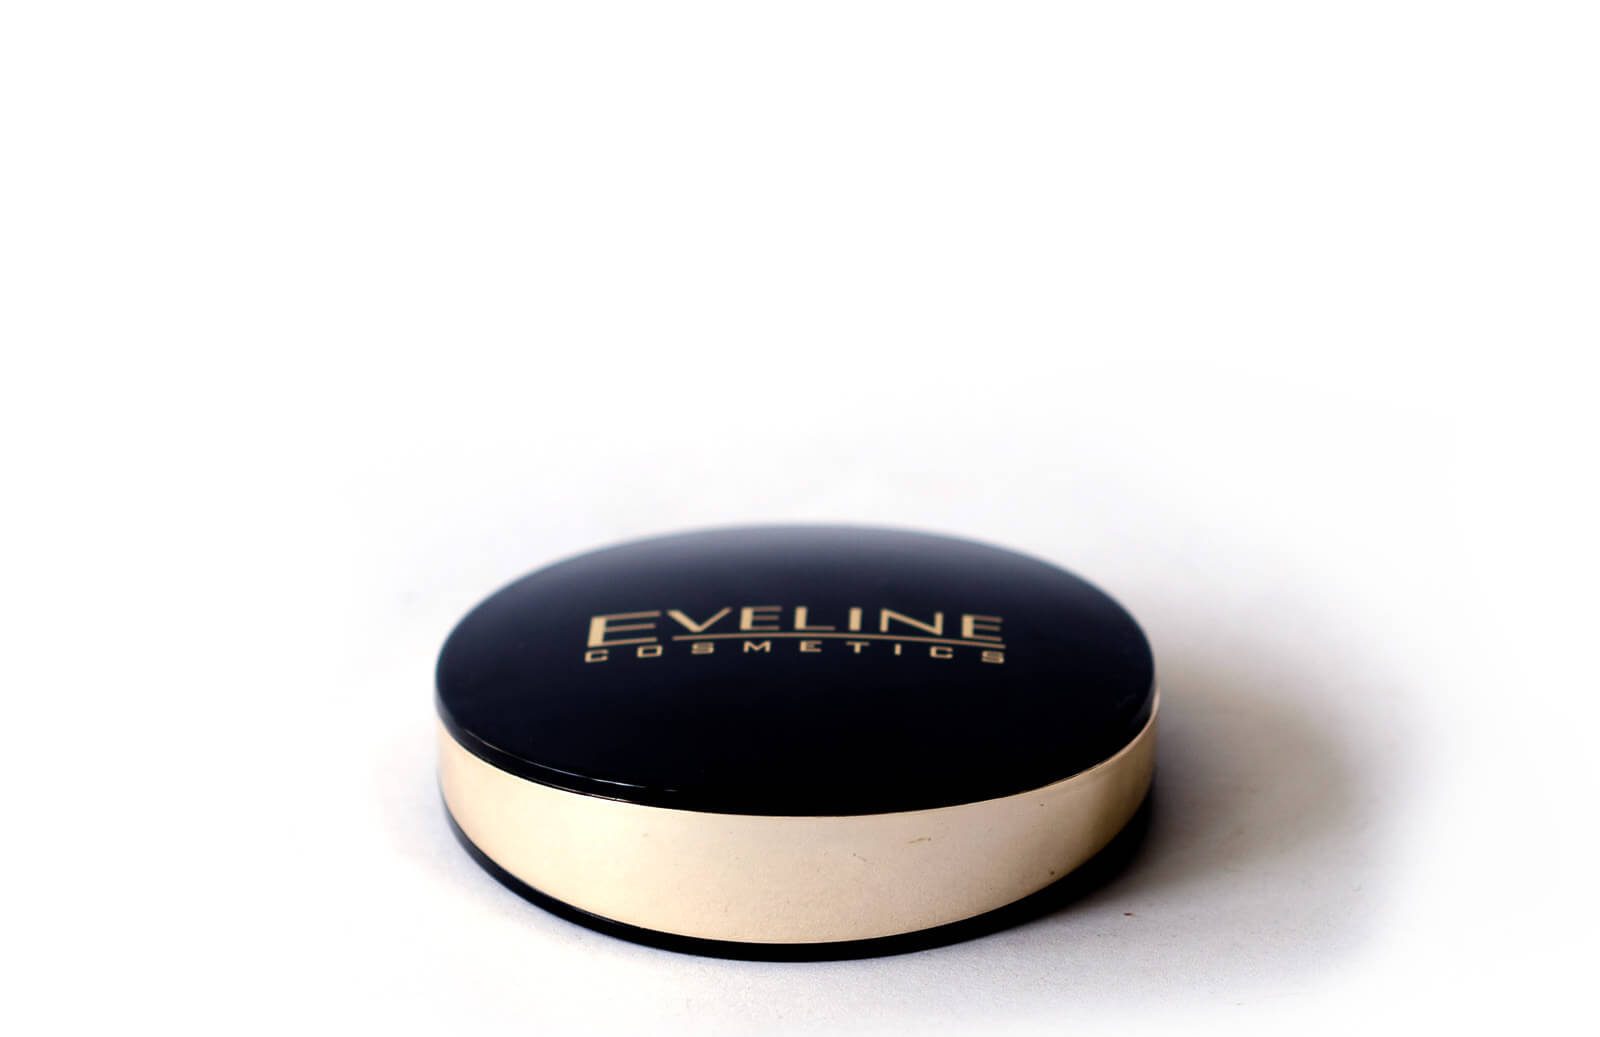 Eveline Cosmetics - Puder-Foundations - Variété Mineral Powder und Celebrities Powder 4